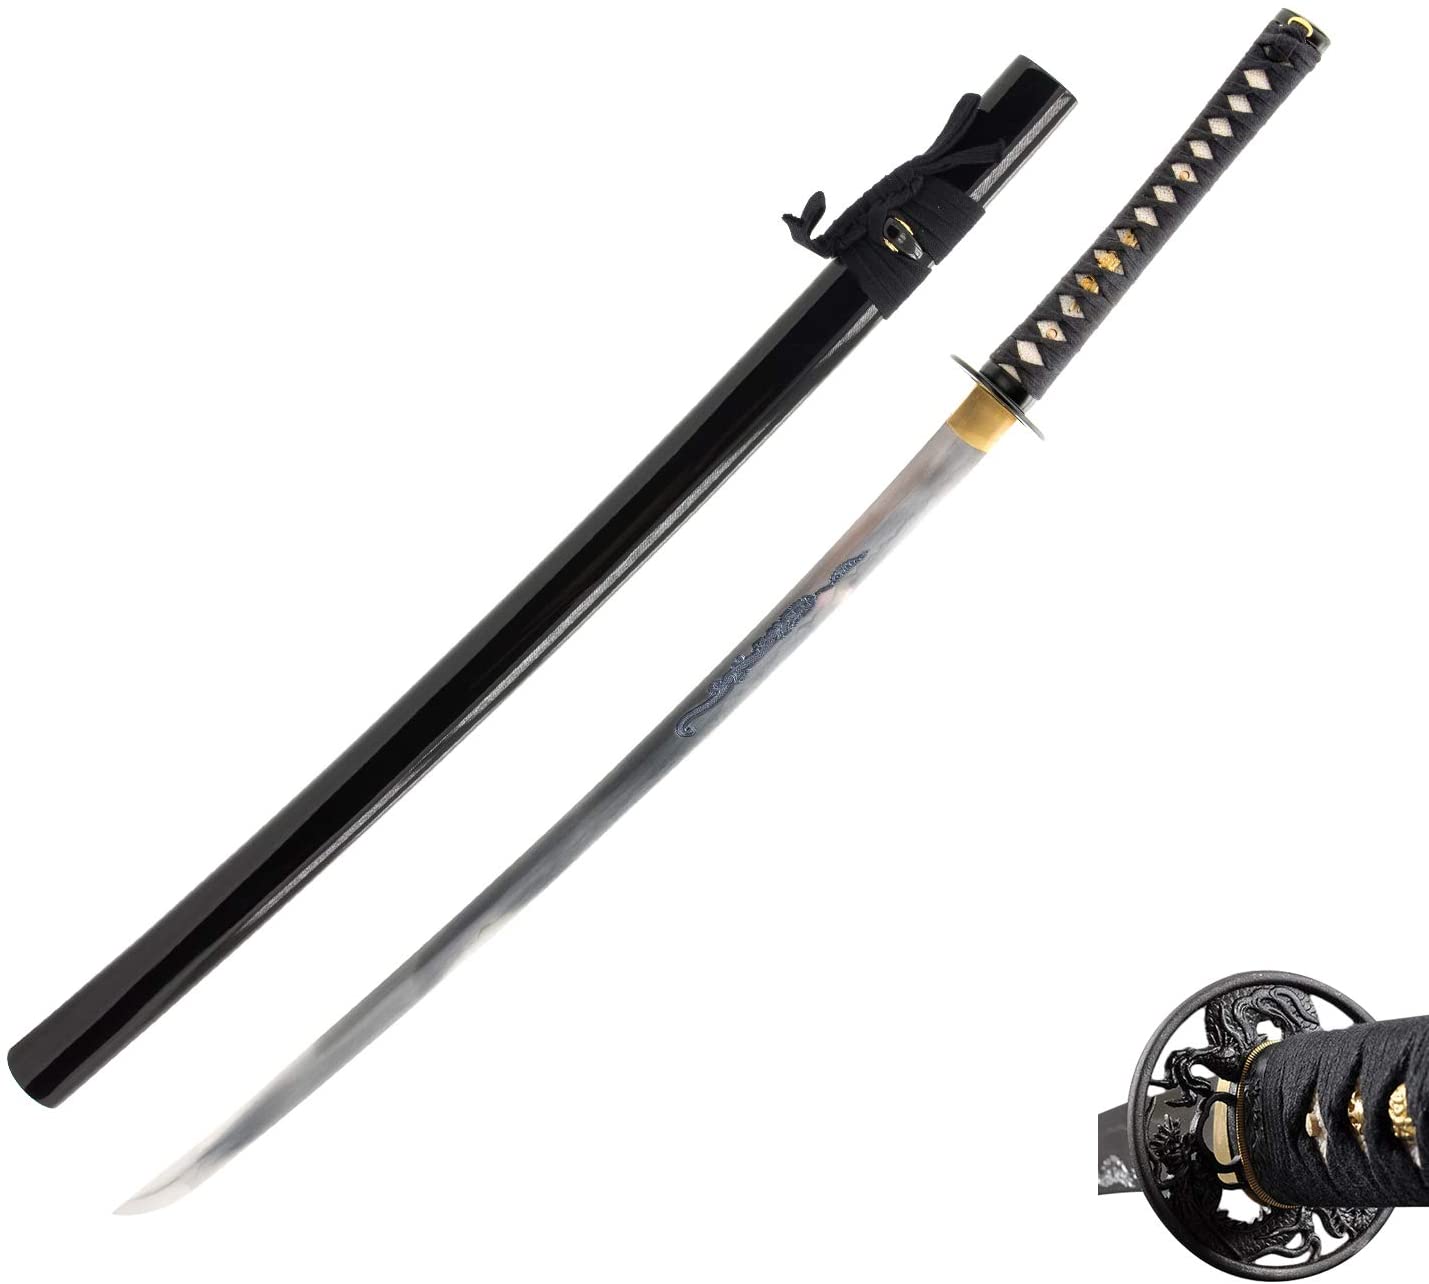 Detail Images Of Samurai Swords Nomer 7